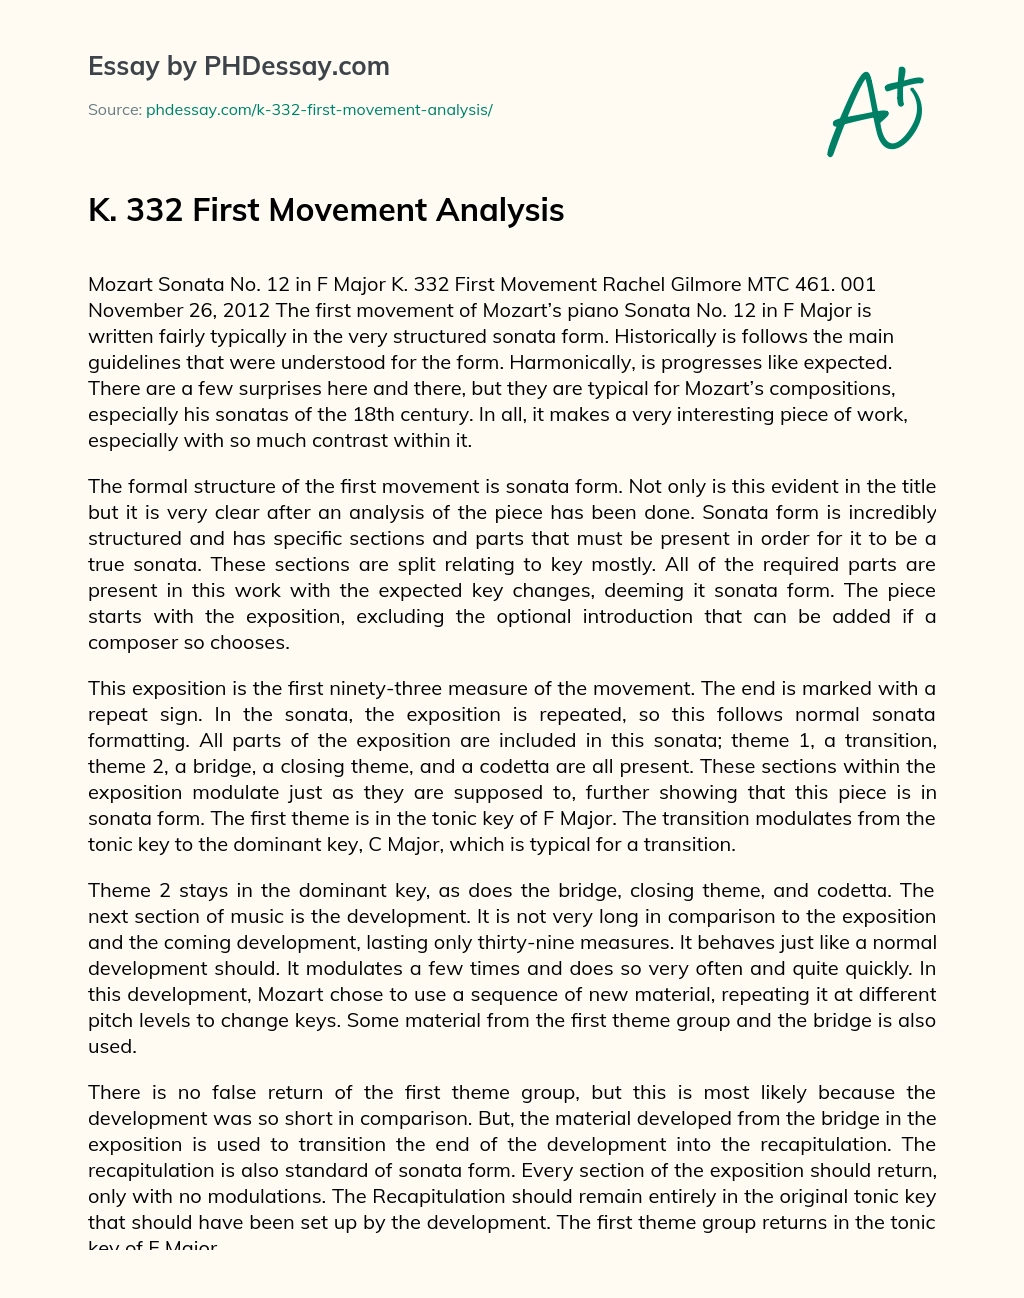 K. 332 First Movement Analysis essay